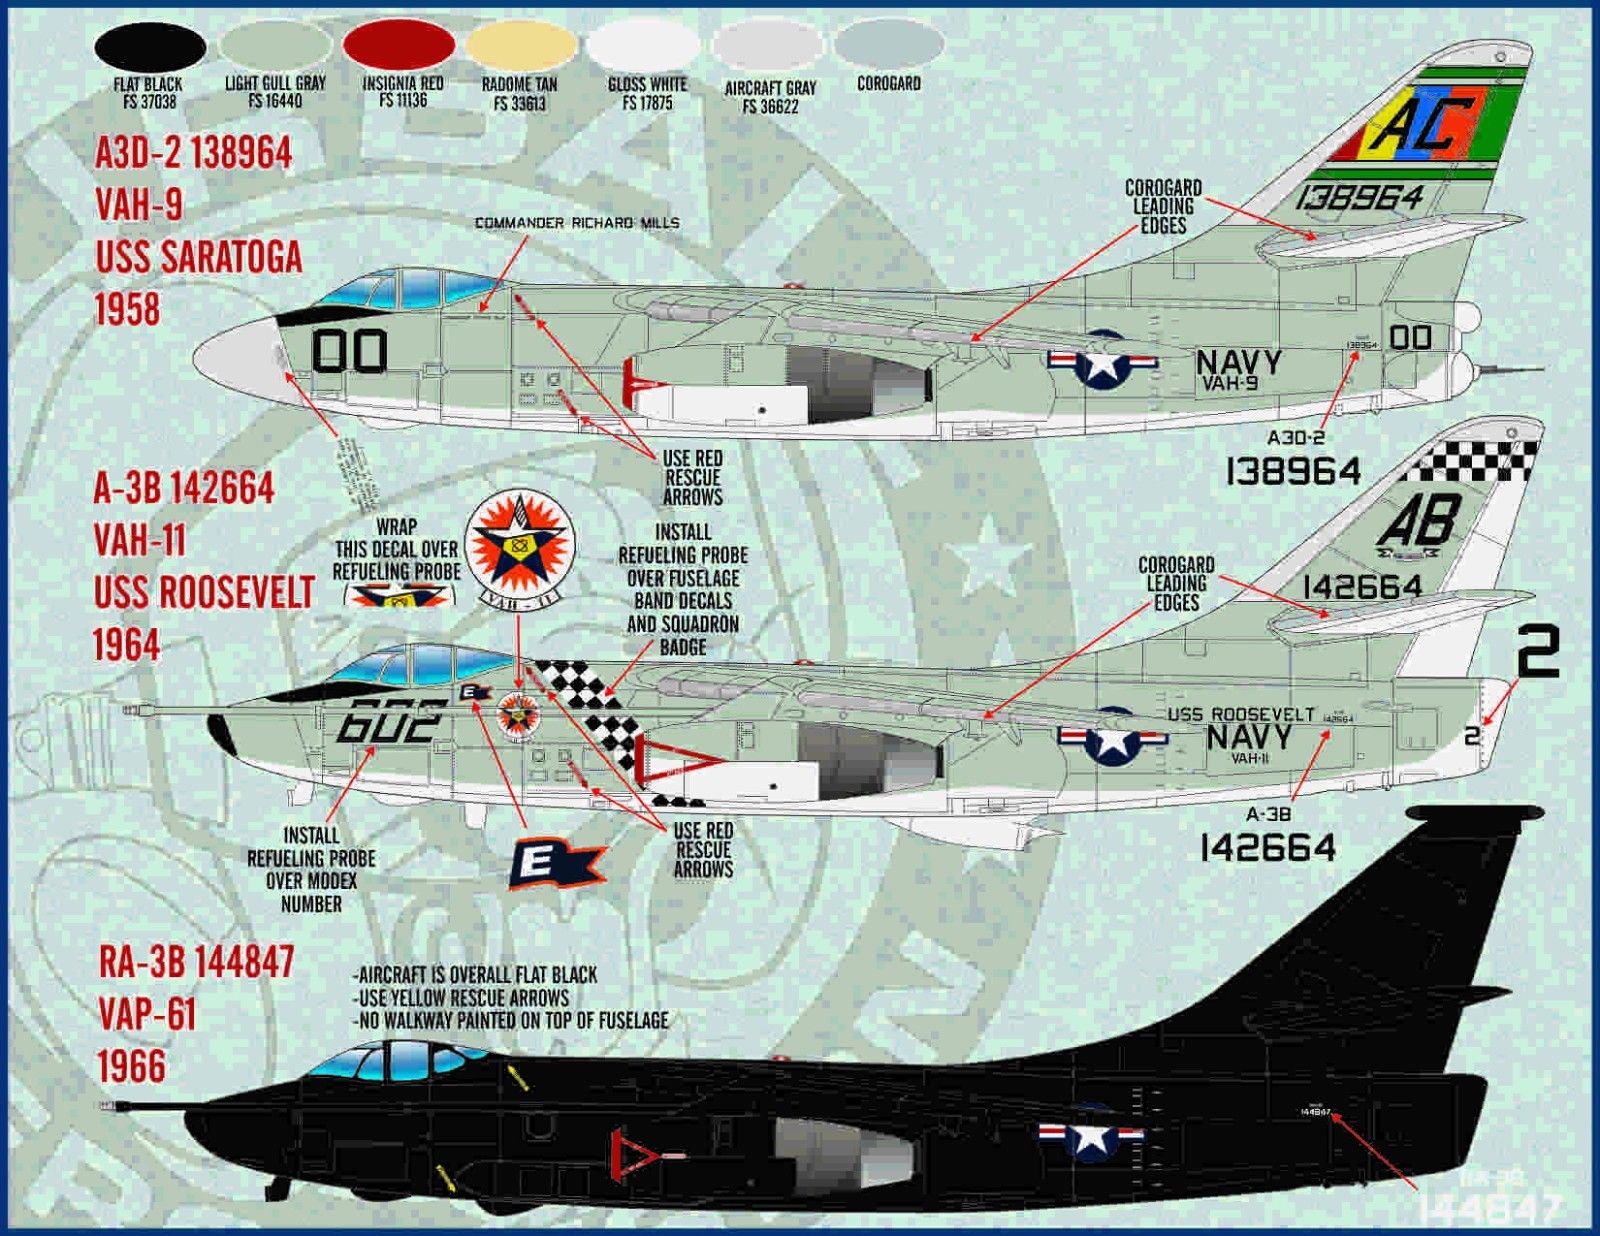 1/48 A3D-1/A3D-2/A3B/RA-3B Skywarrior, Killer Whales Part.1 - Click Image to Close